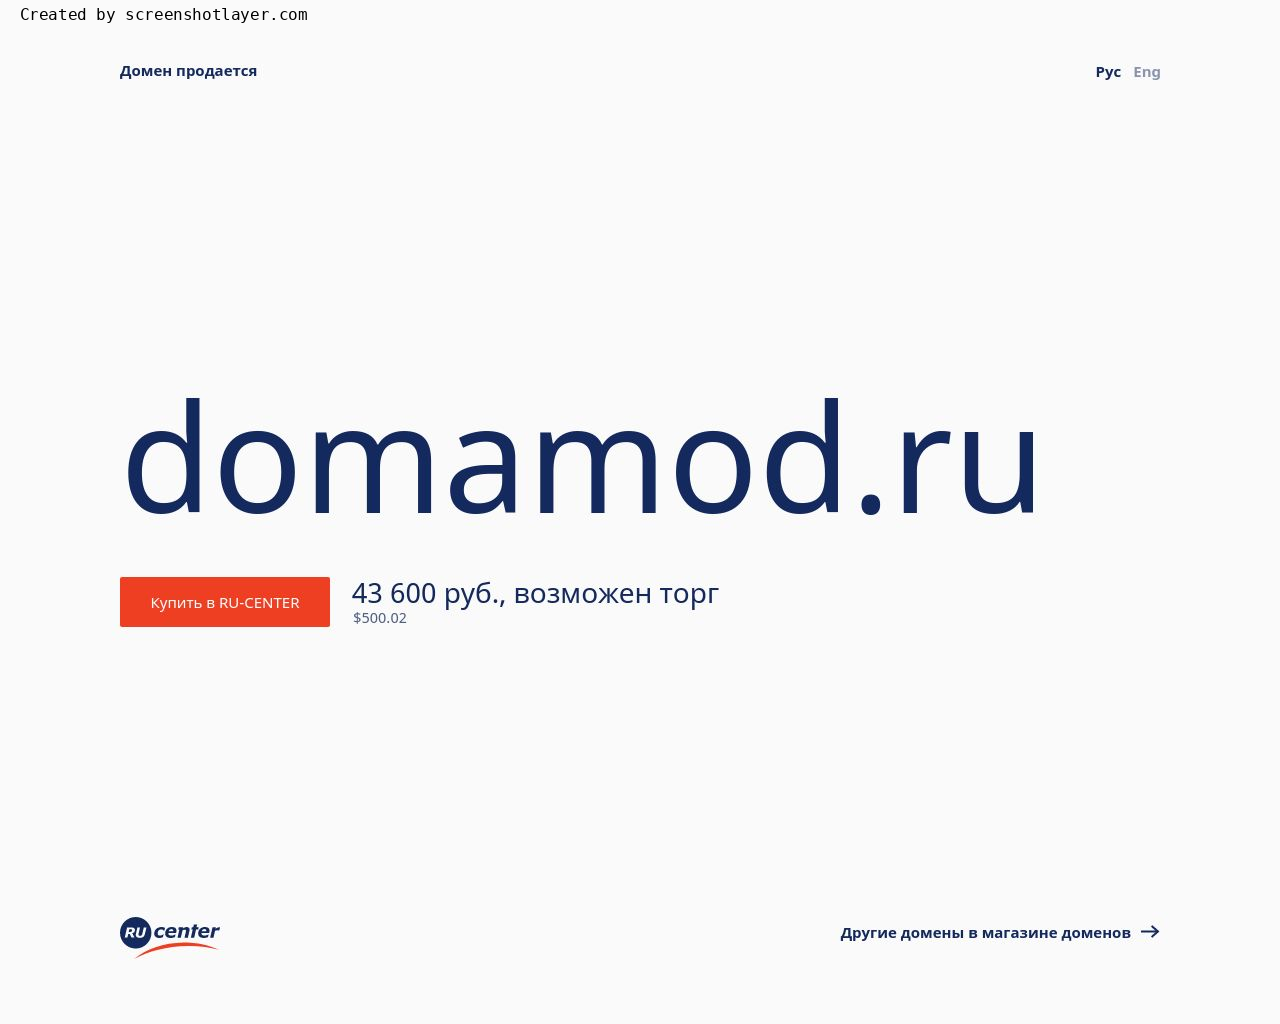 Изображение сайта domamod.ru в разрешении 1280x1024